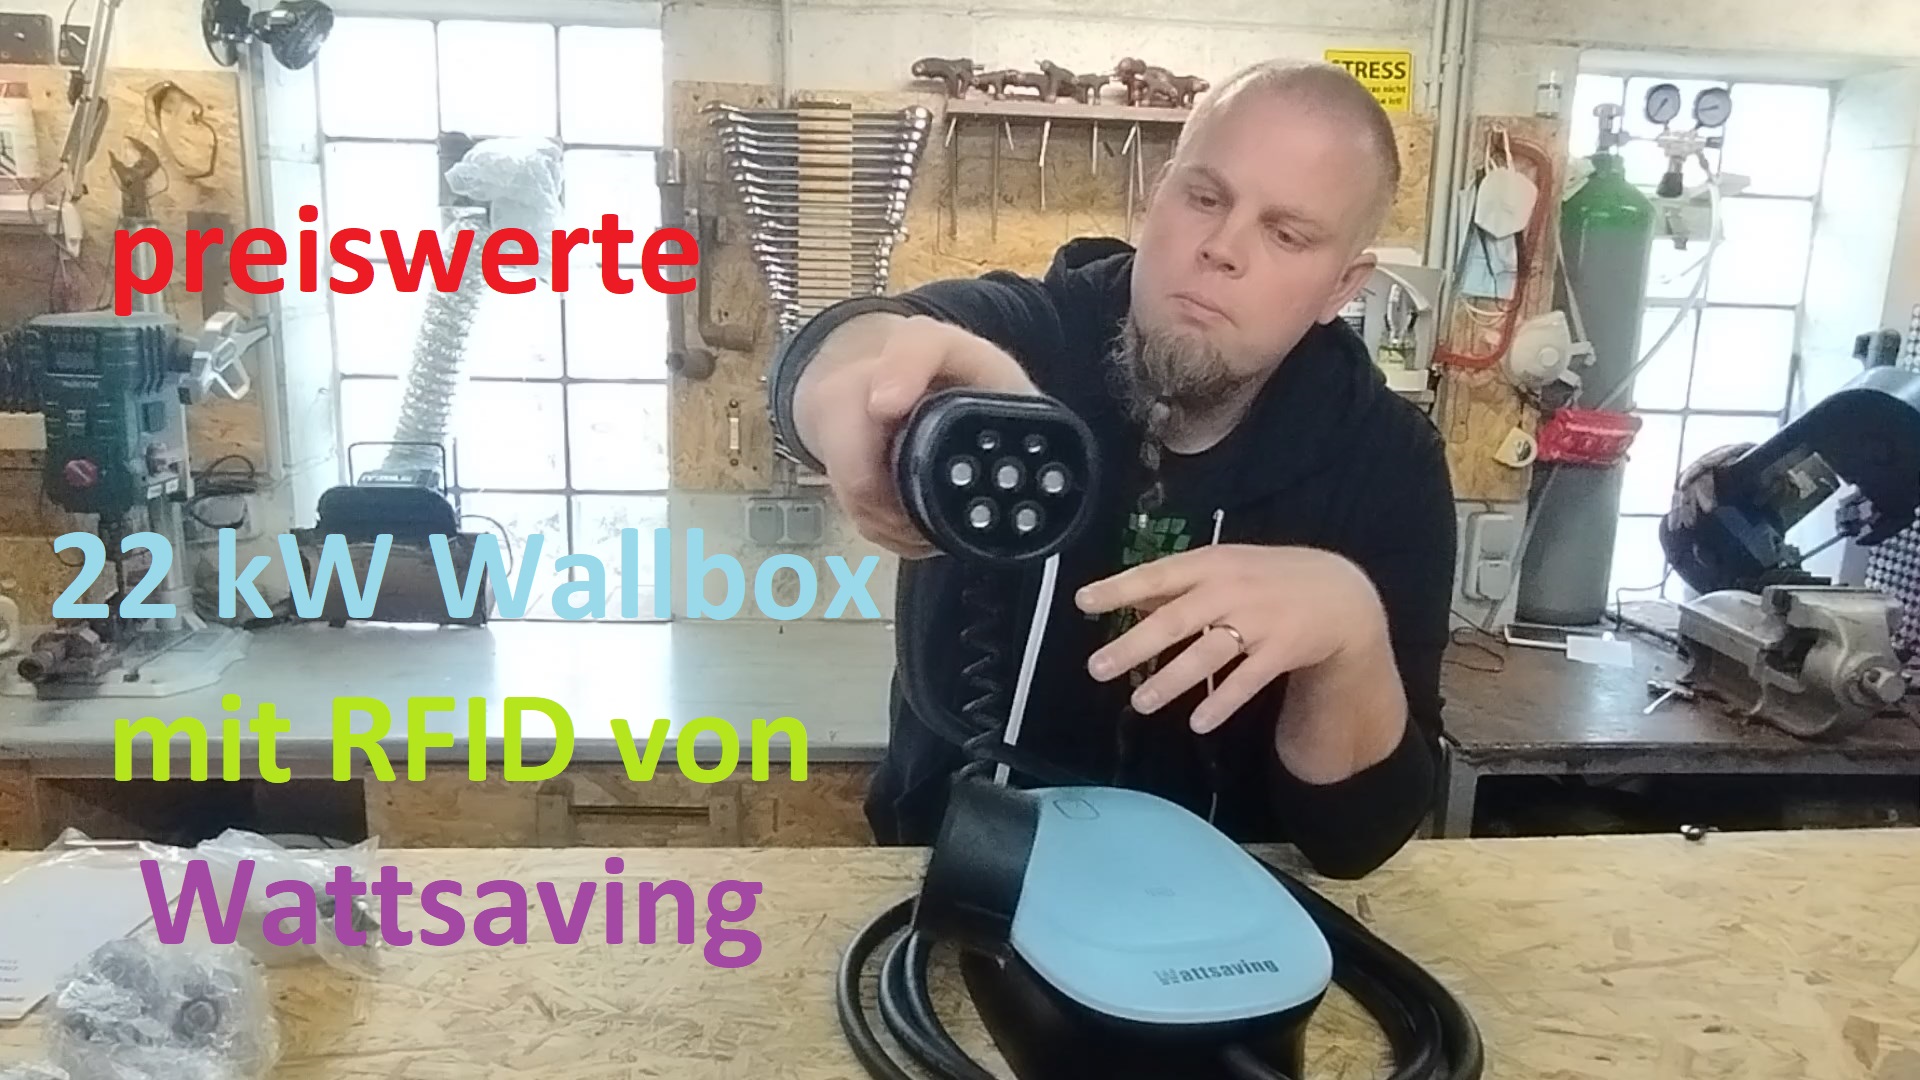 Wallbox 22kW Wattsaving Titelbild